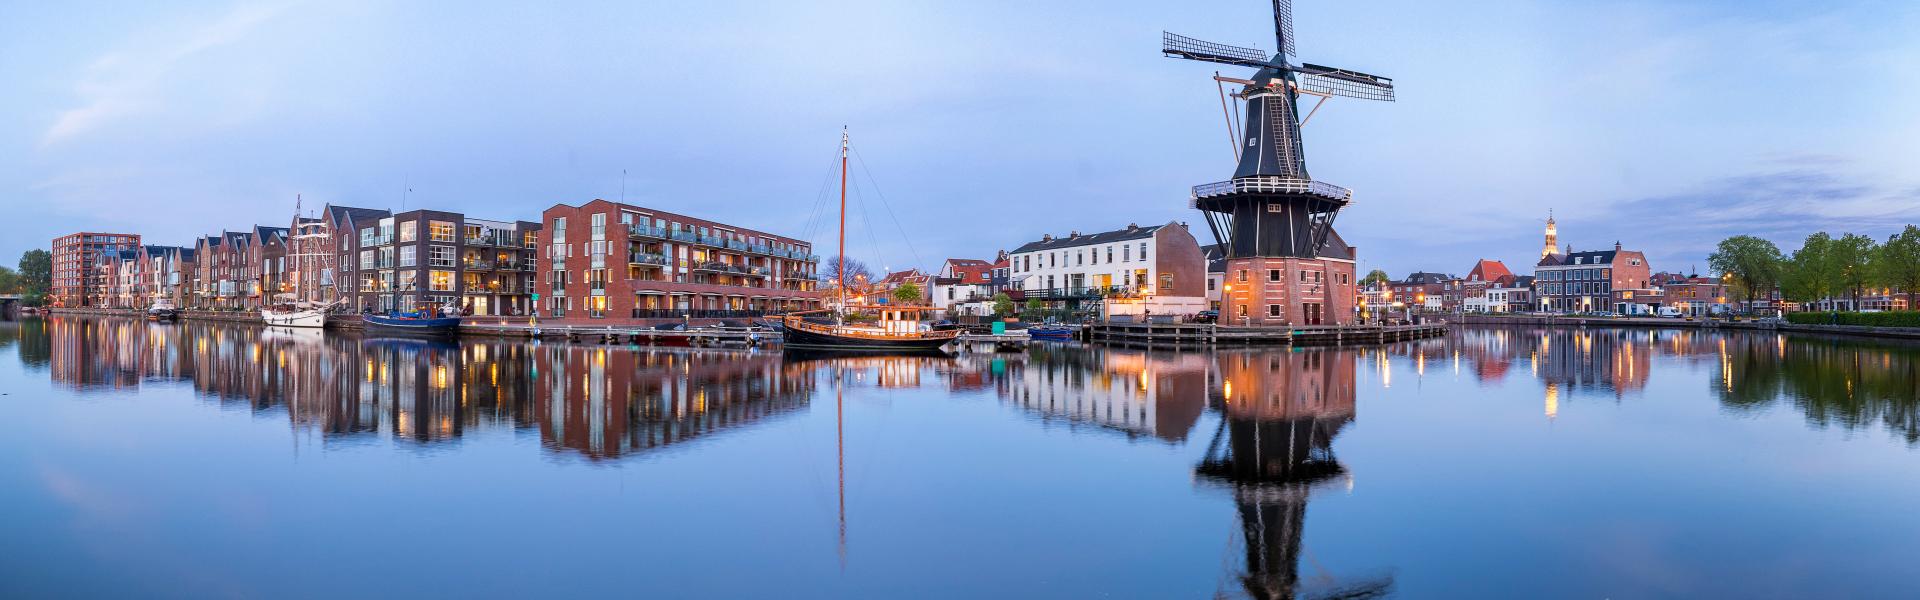 Haarlem Scenic View